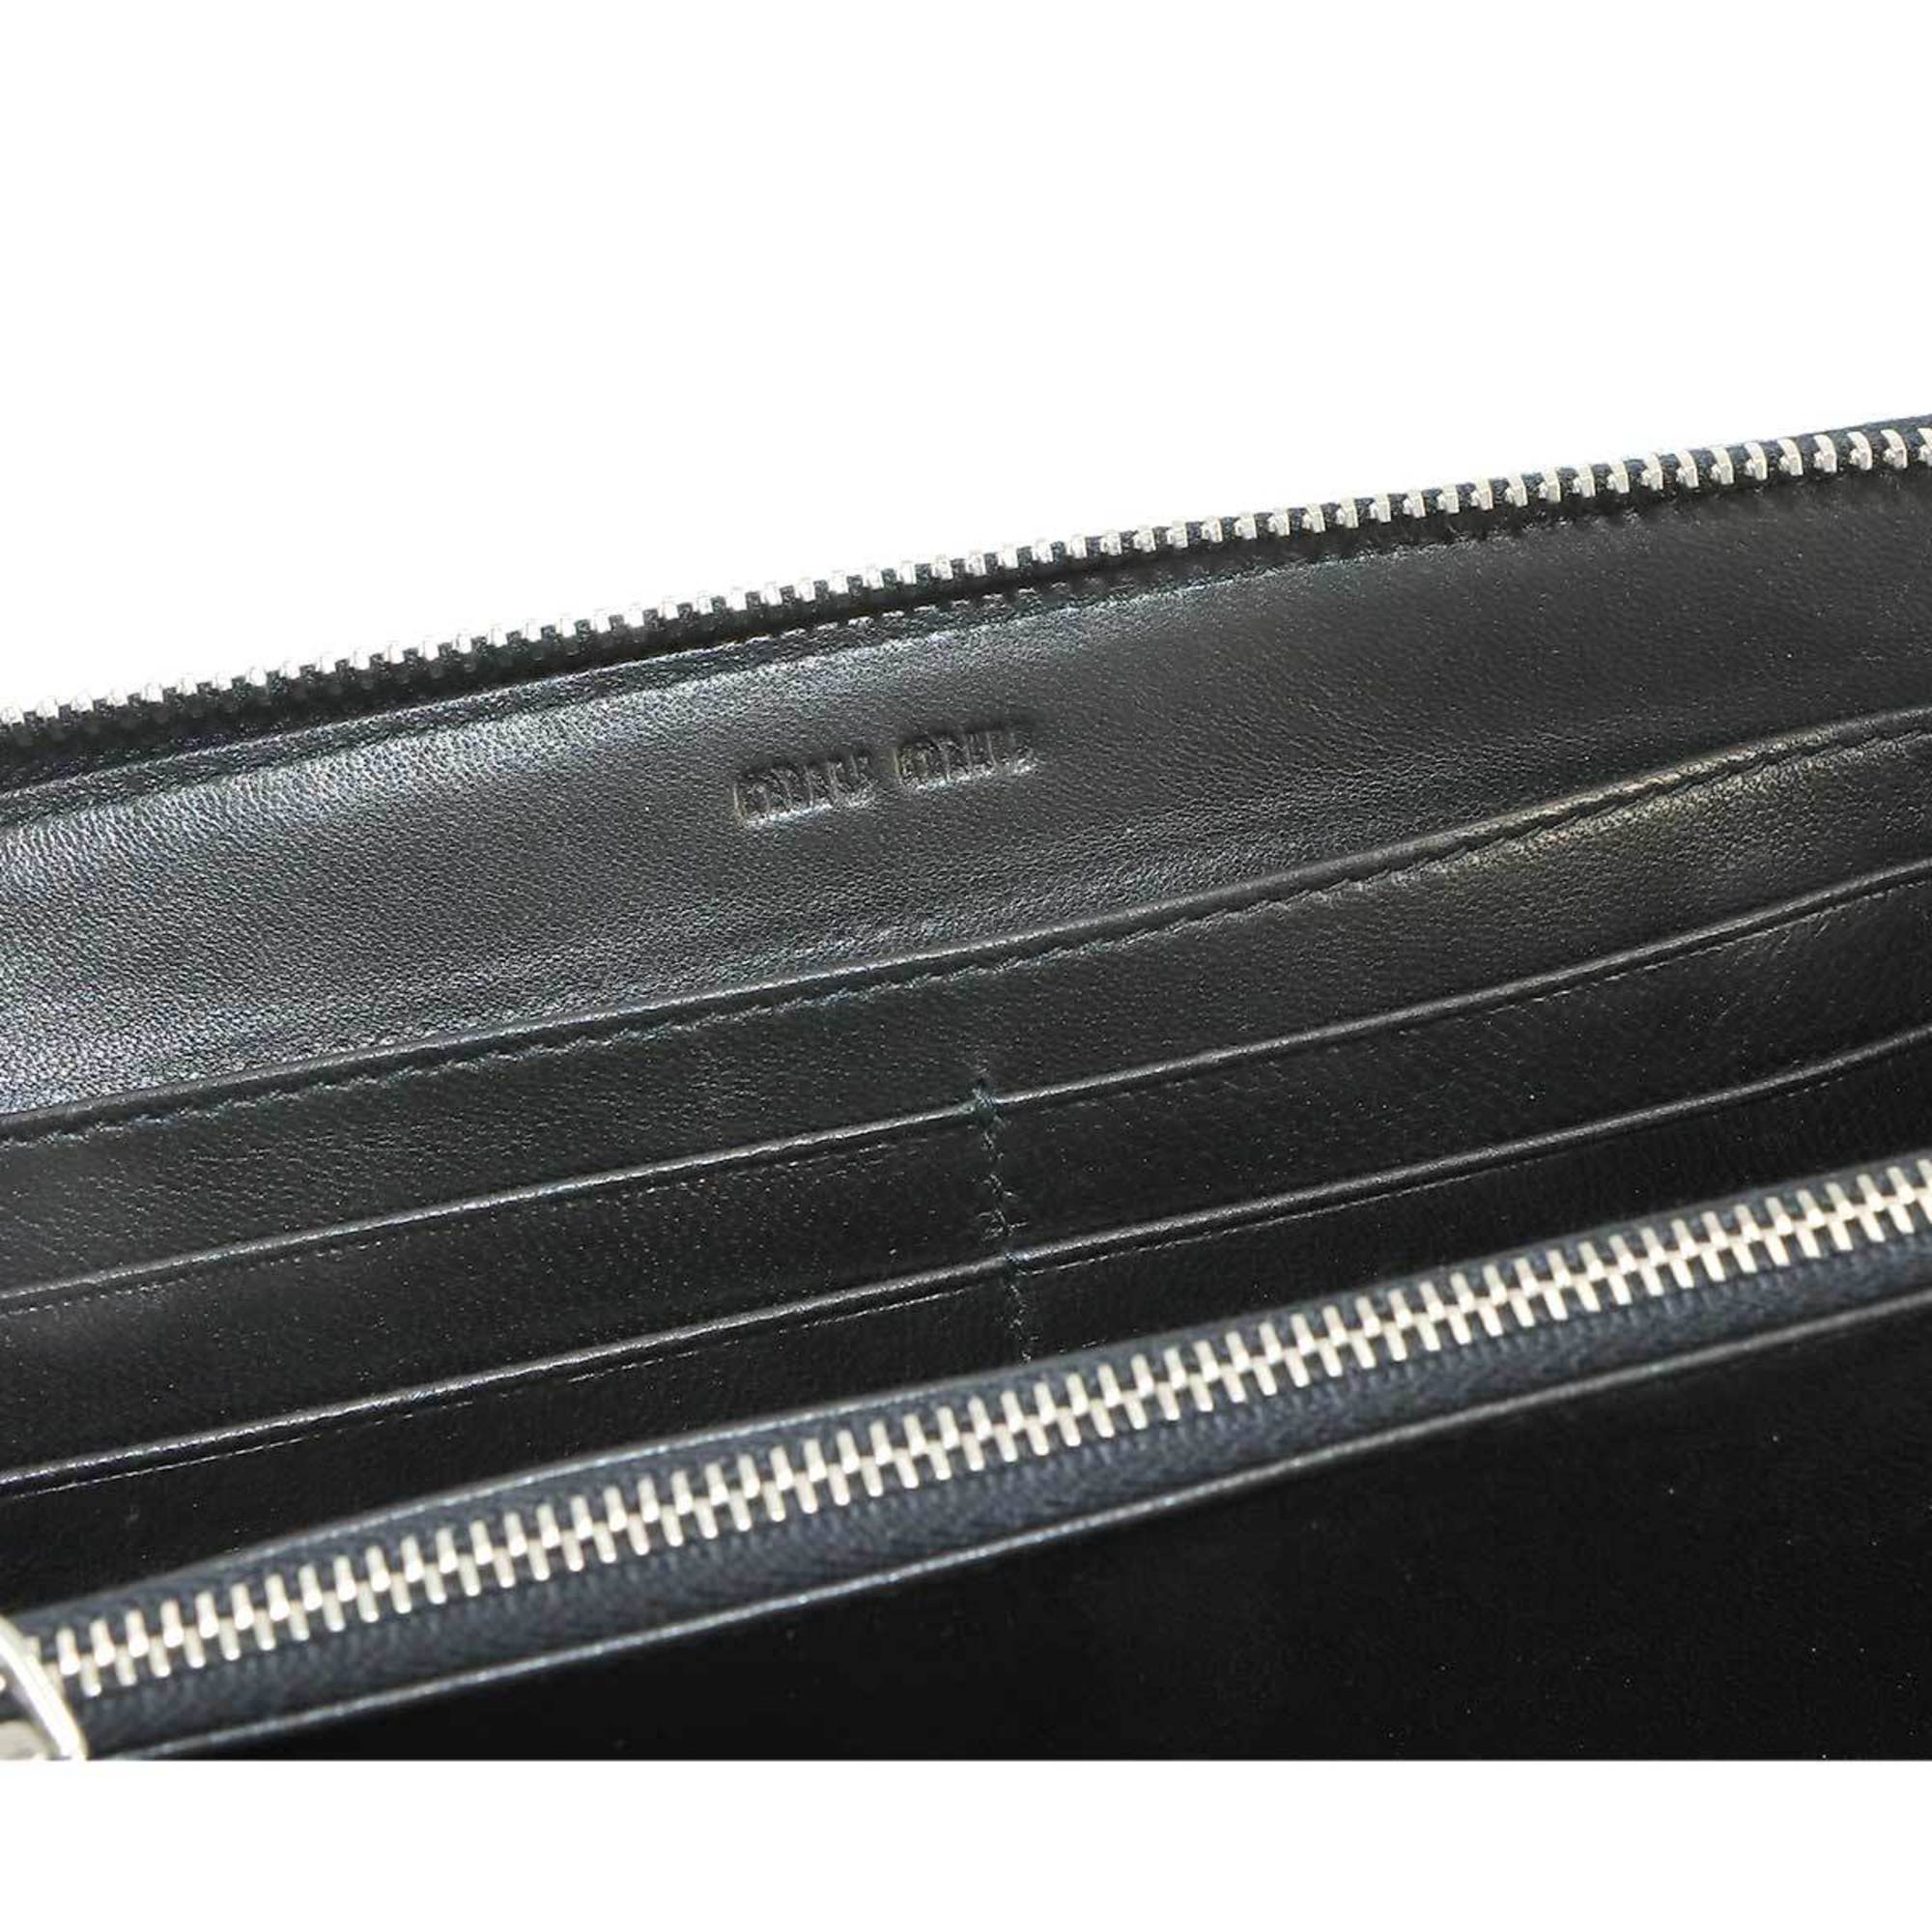 Miu Miu Miu Studded Round Long Wallet Leather Black 5M0506 Silver Metal Fittings